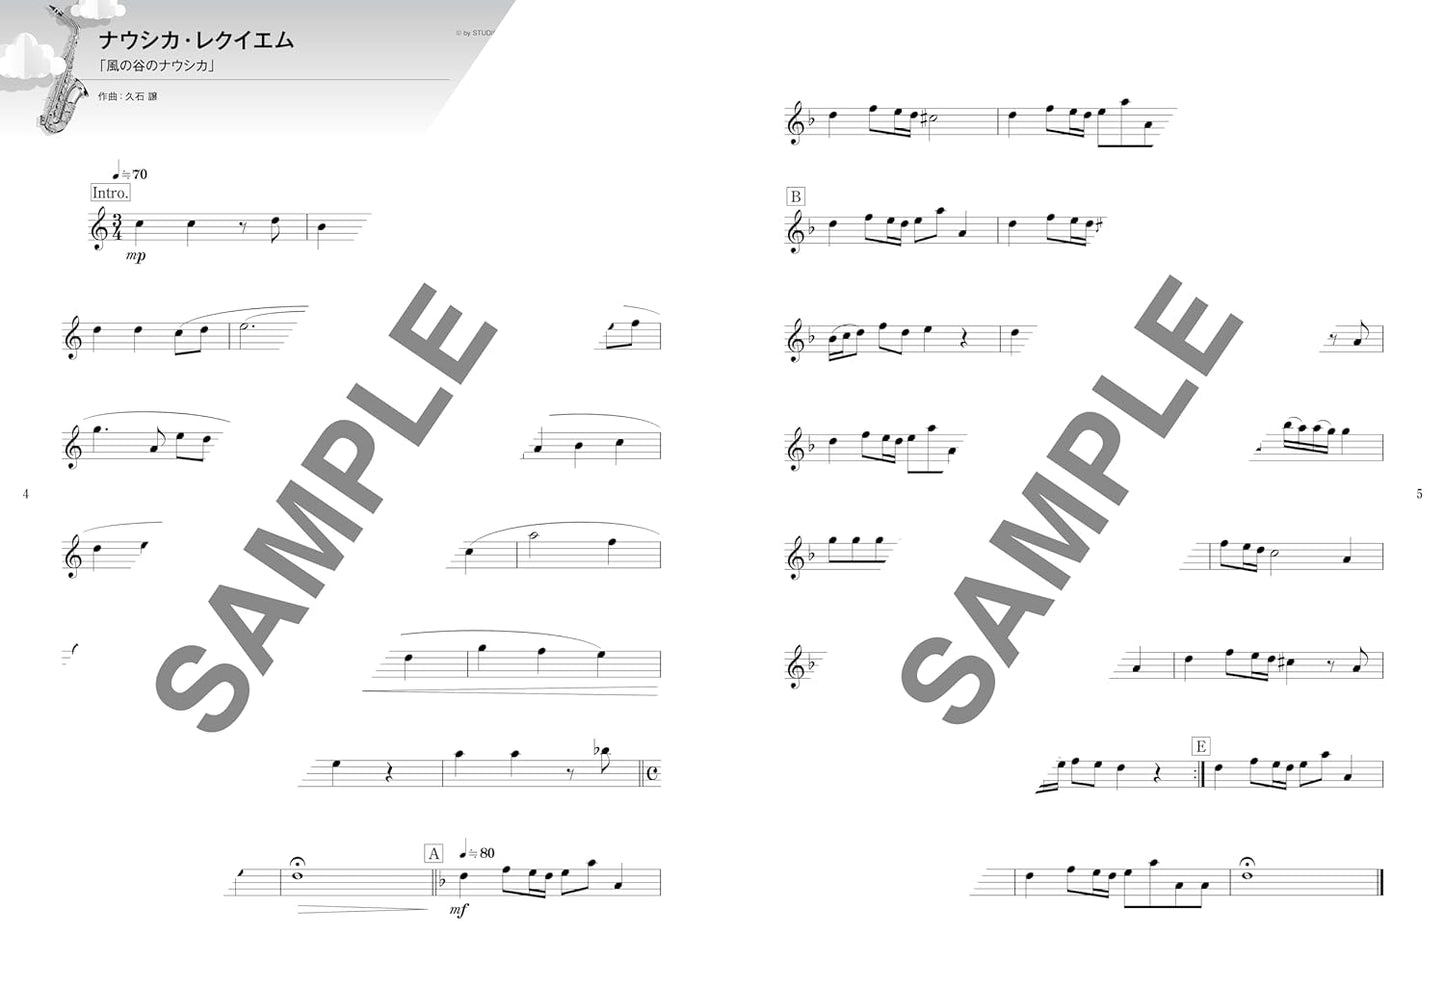 Studio Ghibli Collection for Alto Saxophone Solo(Upper-Intermediate) Sheet Music Book